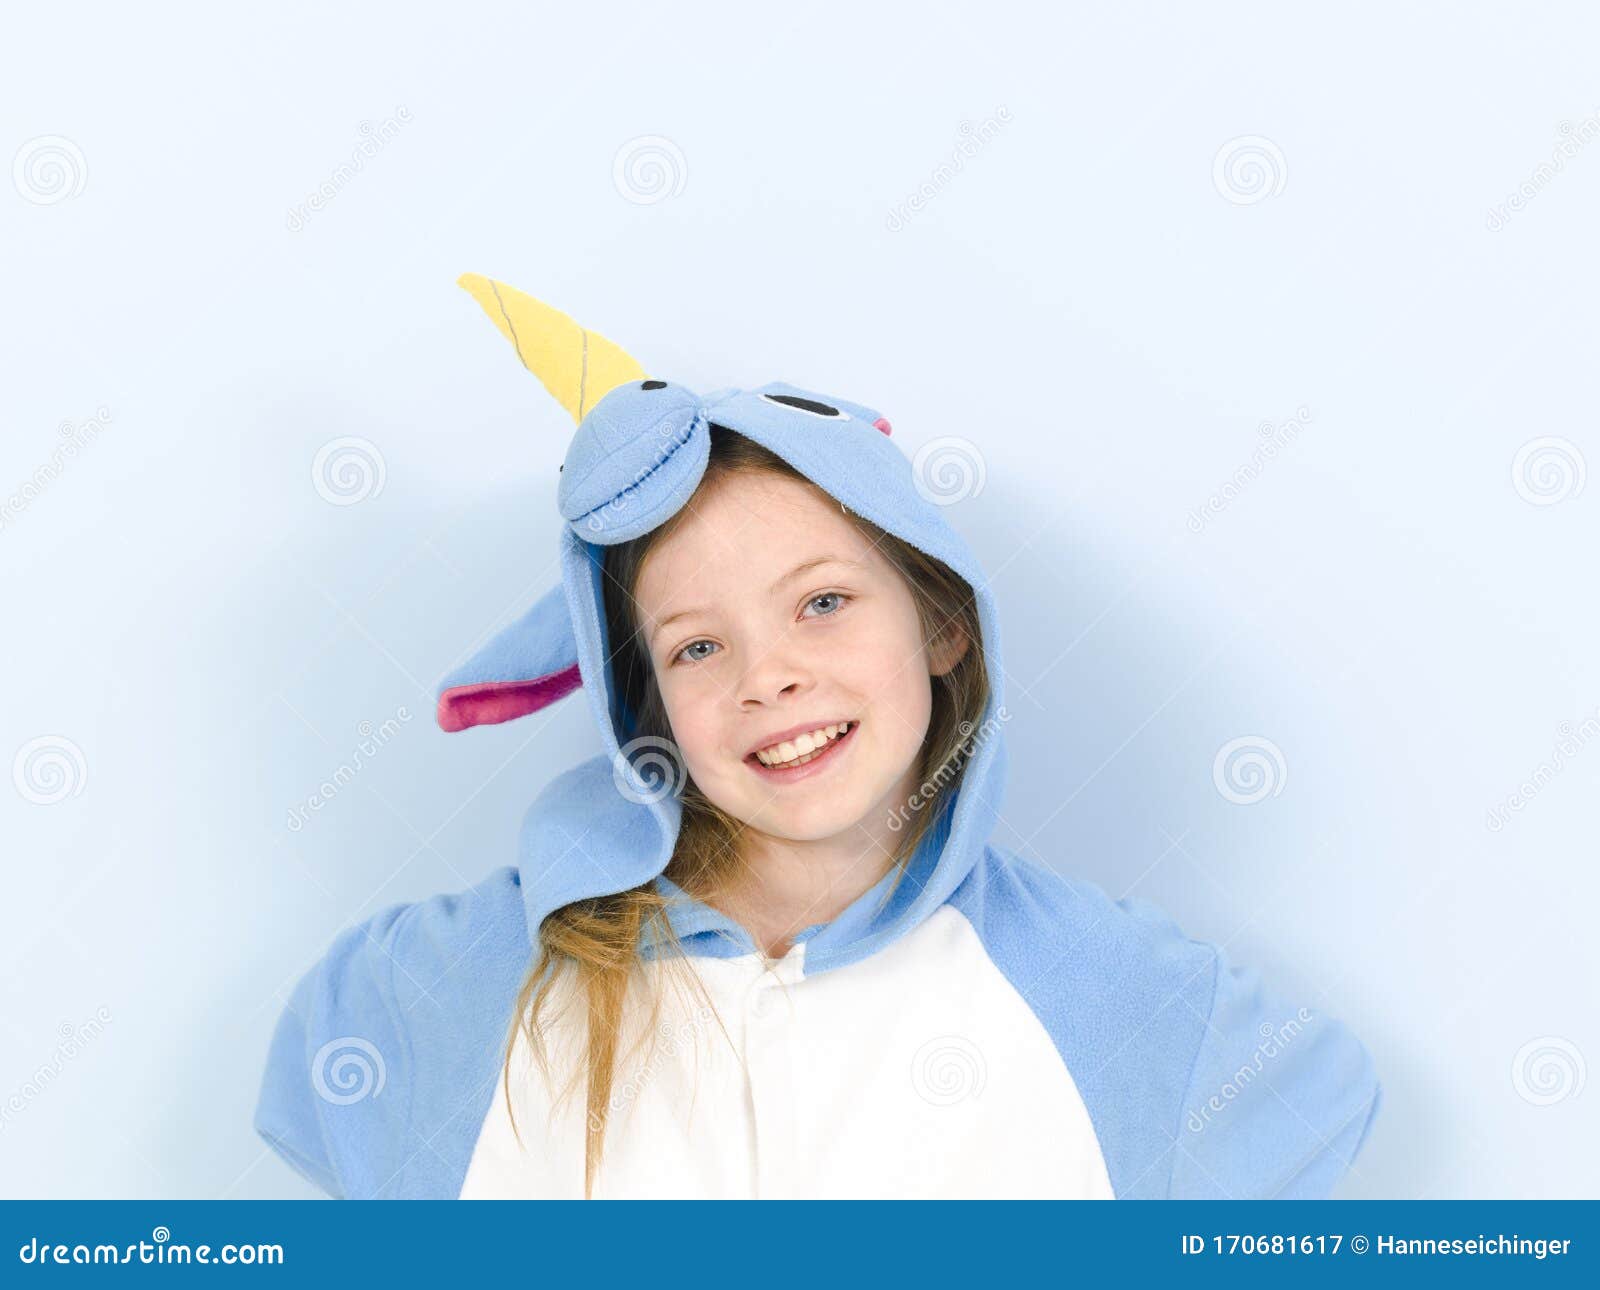 Blue Unicorn Costume - wide 4